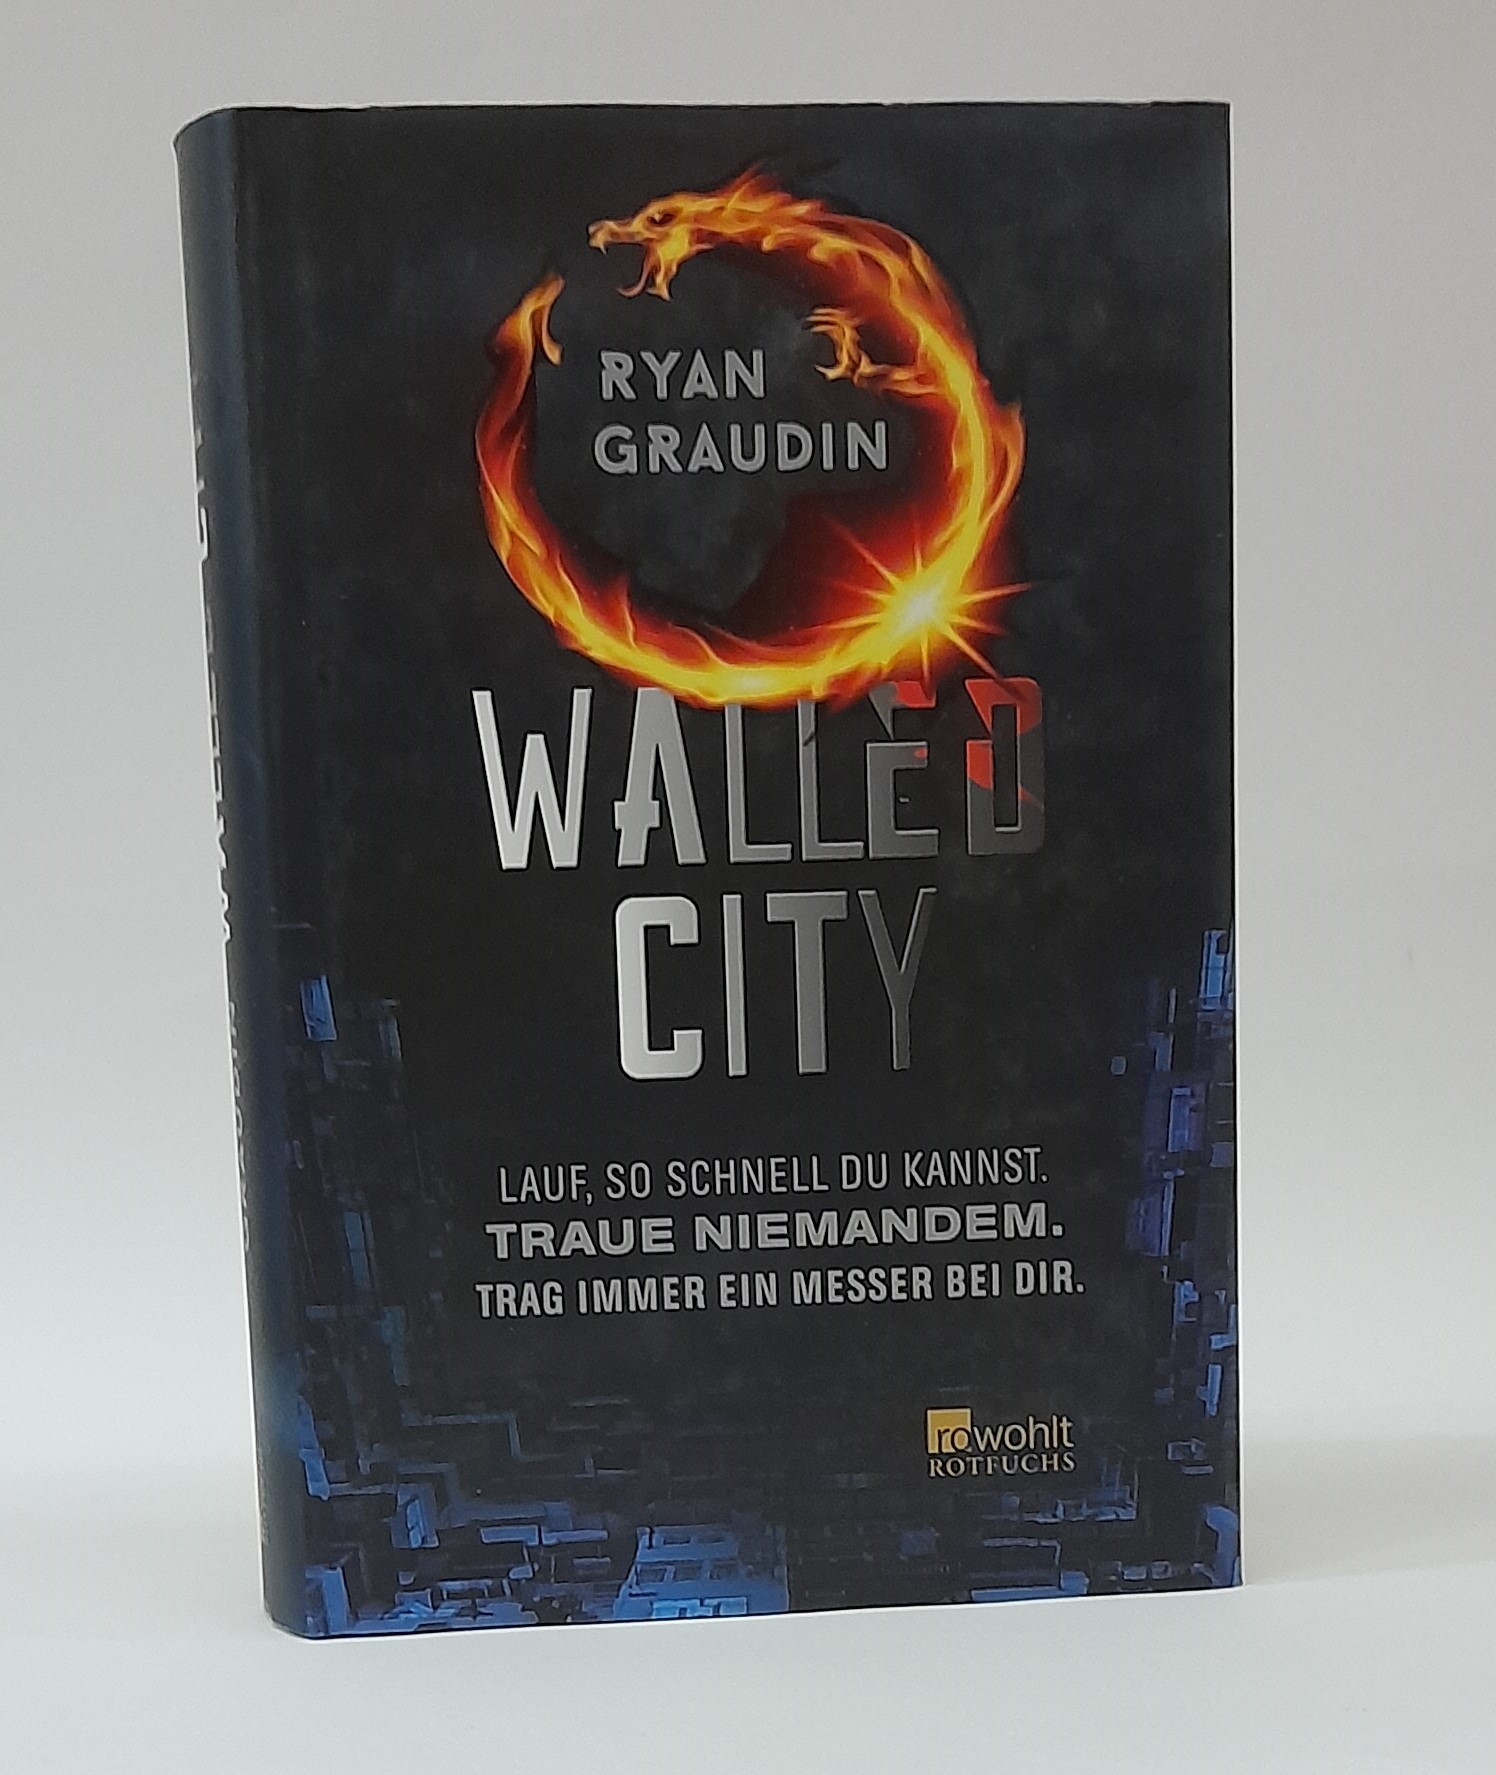 Walled City - Graudin, Ryan